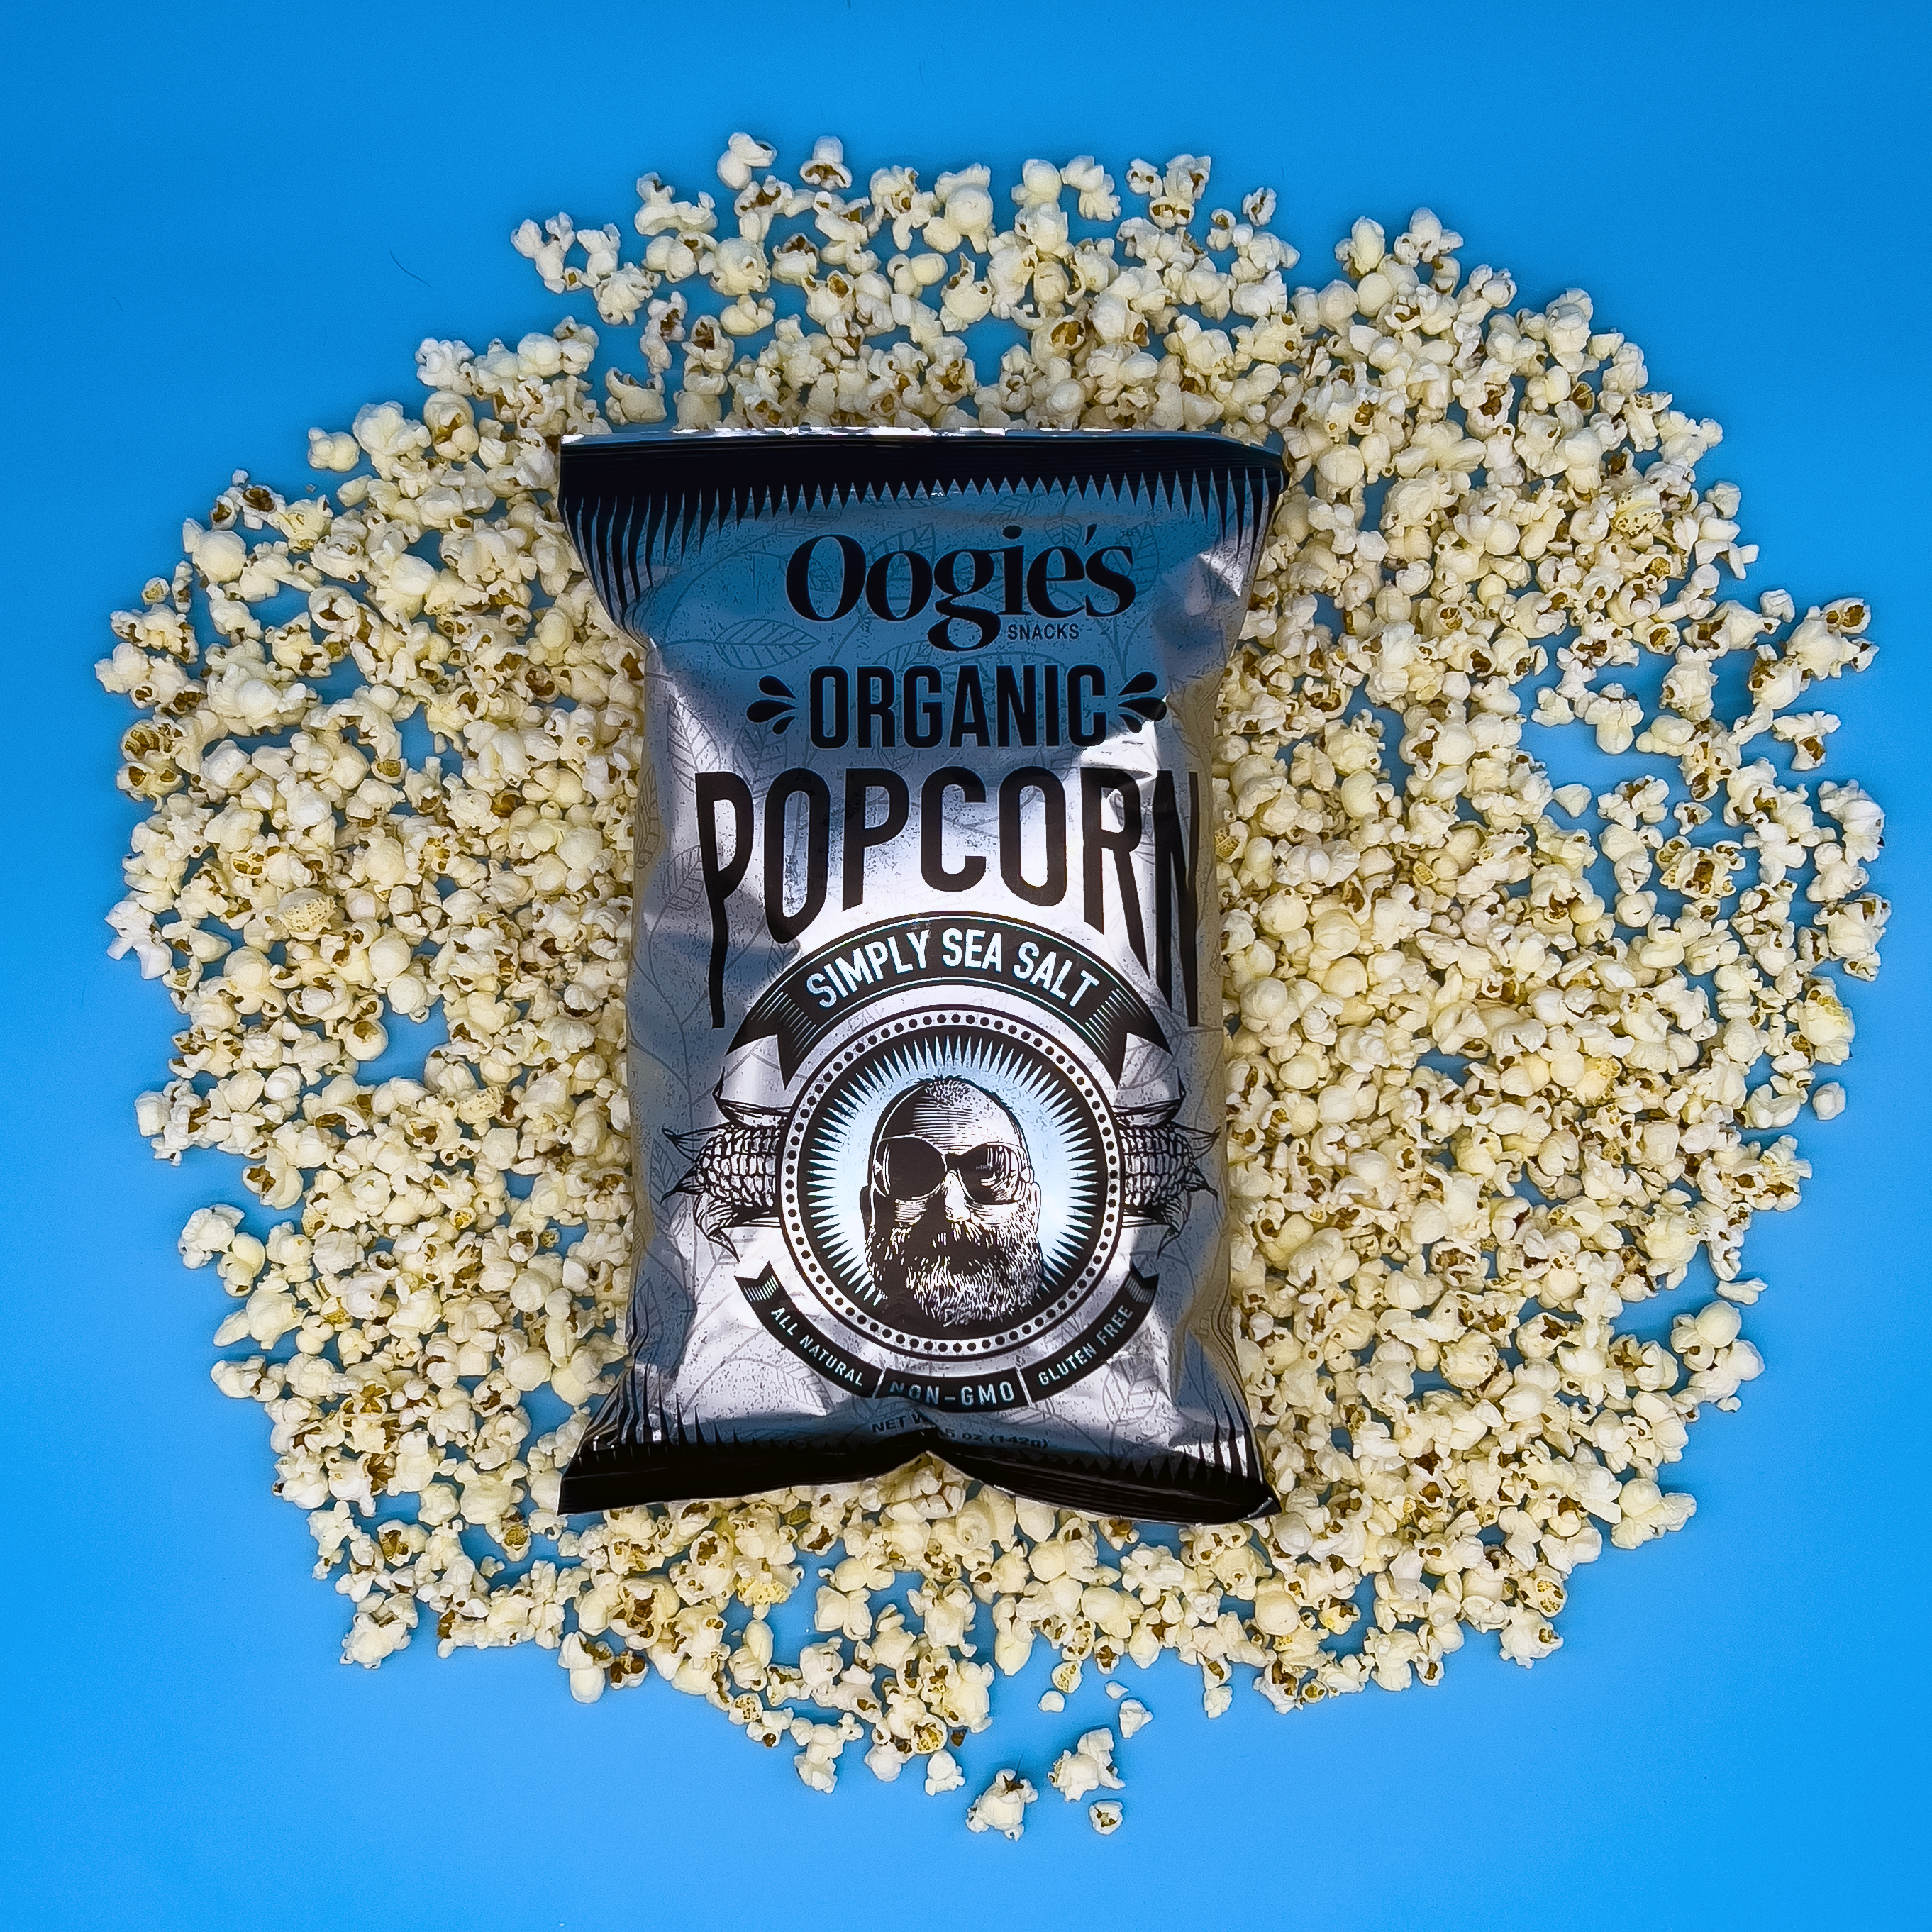 NEW! Organic Simply Sea Salt Popcorn Big Bag (5oz)